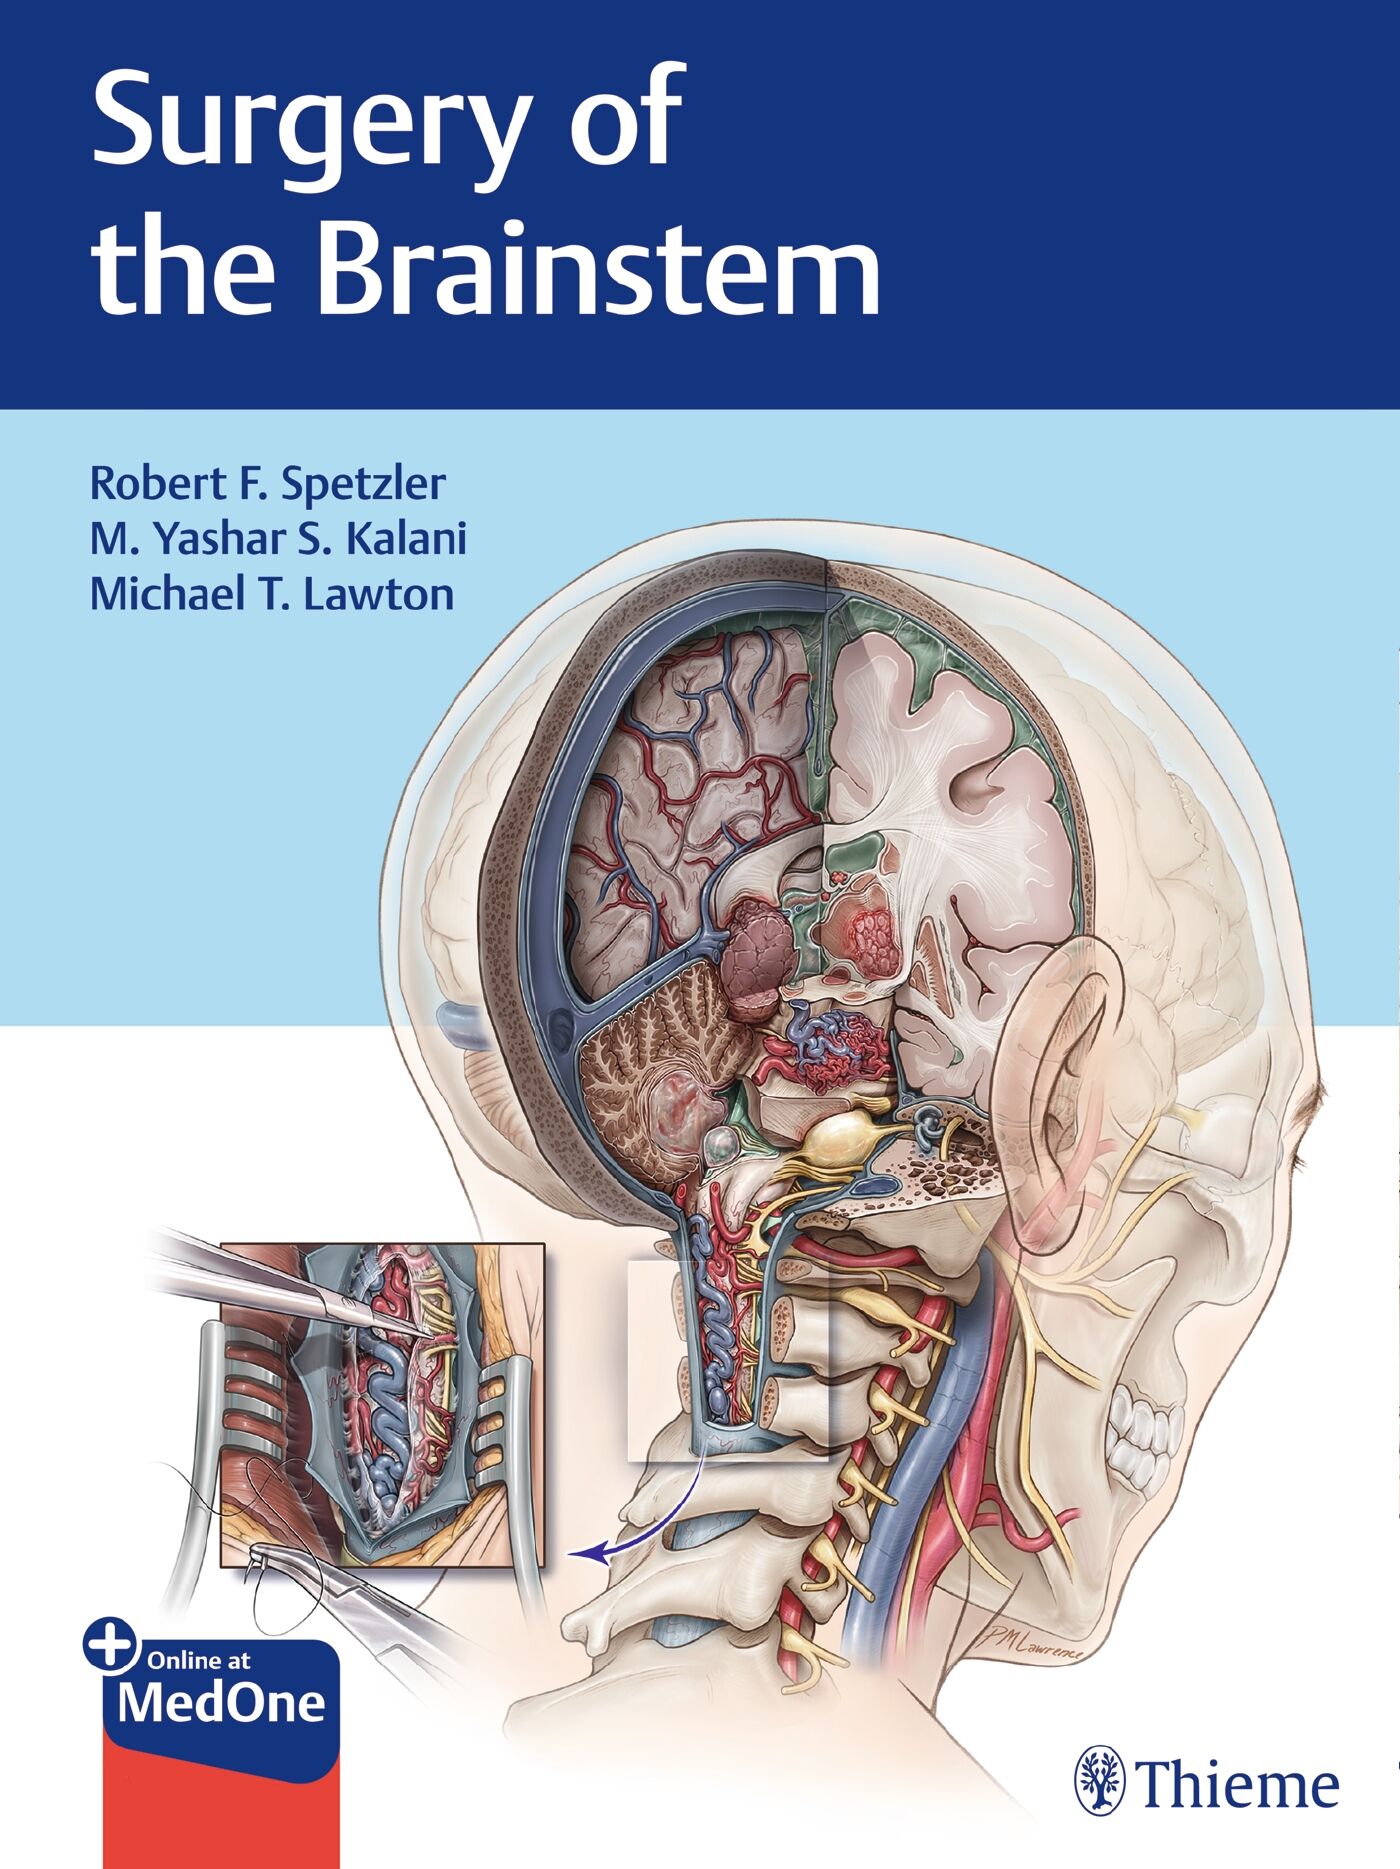 Surgery of the Brainstem, 9781626232914